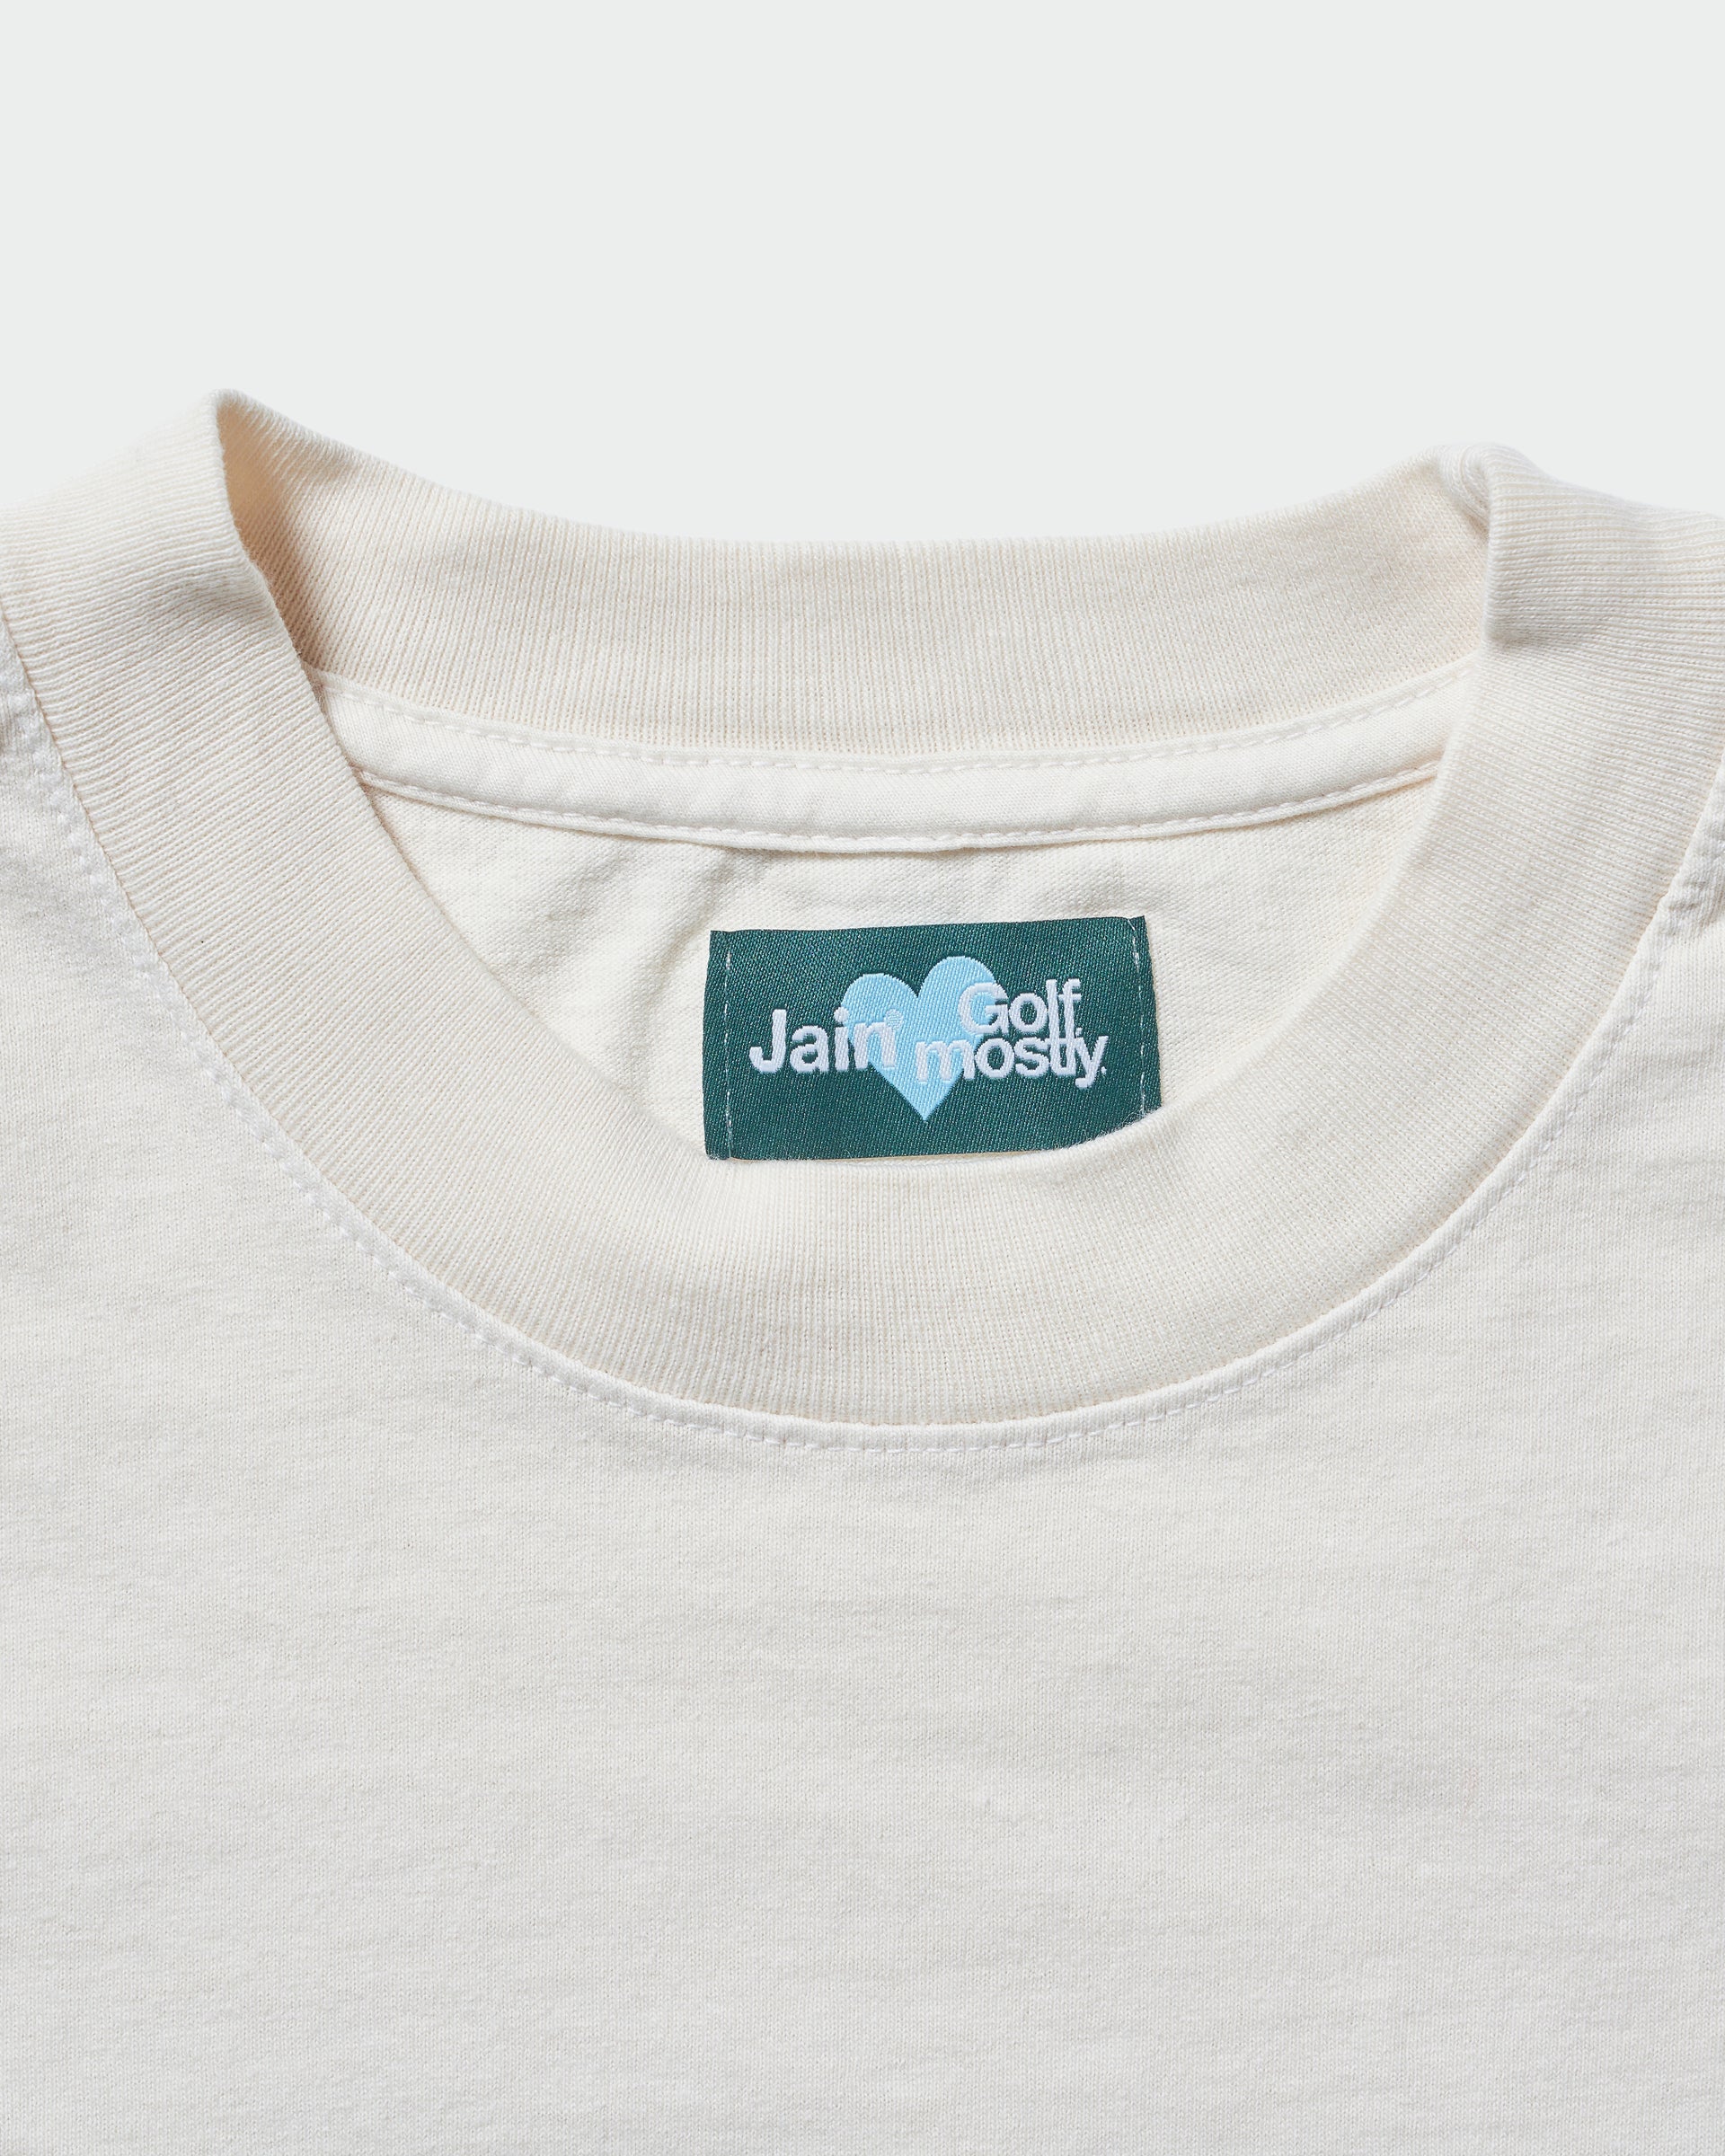 Jain x Golf, Mostly: T-Shirt